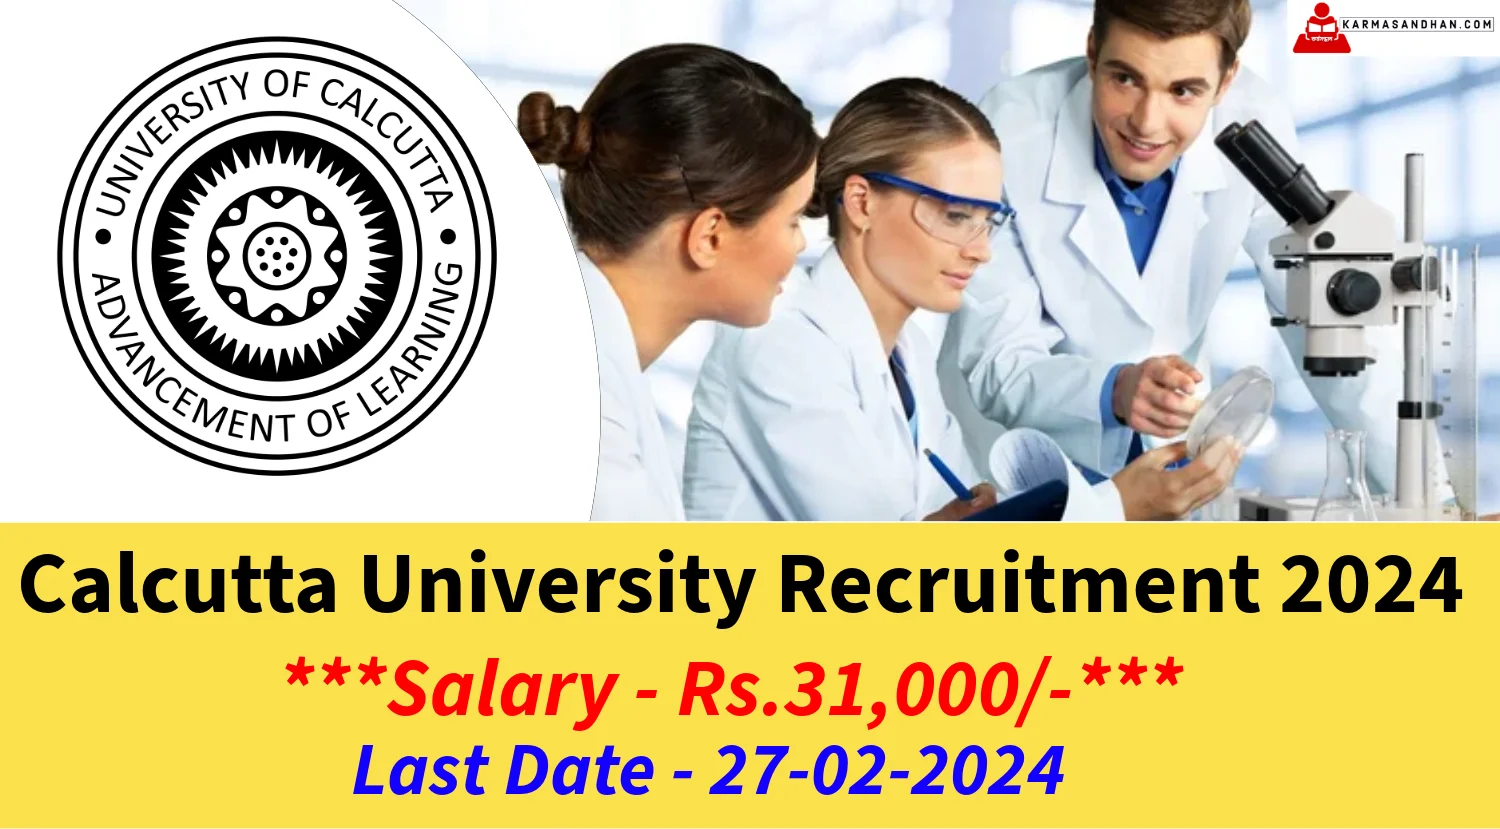 Calcutta University Recruitment 2024 Notification out